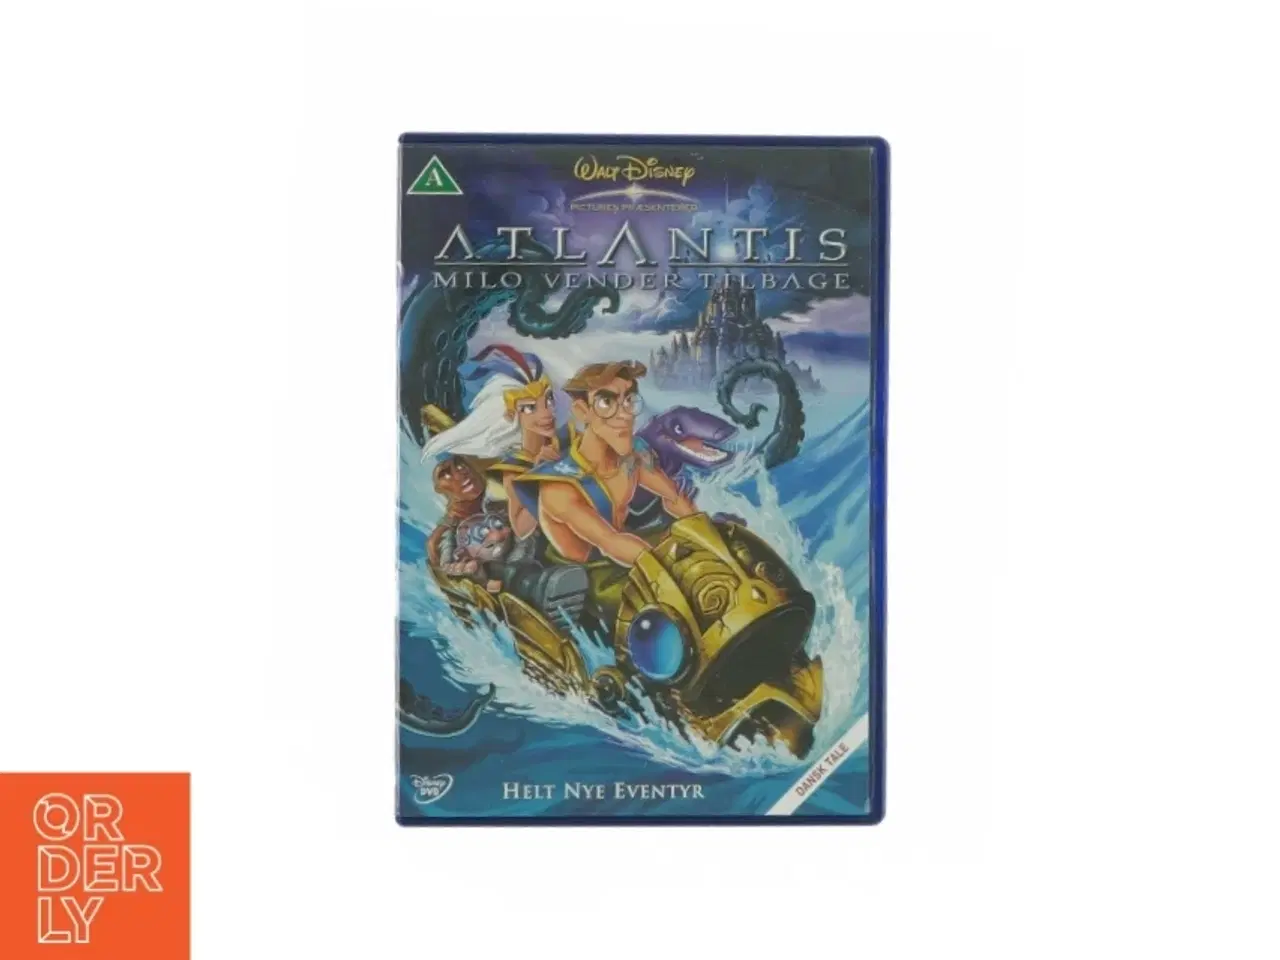 Billede 1 - Atlantis - Mlo vender tilbage (DVD)